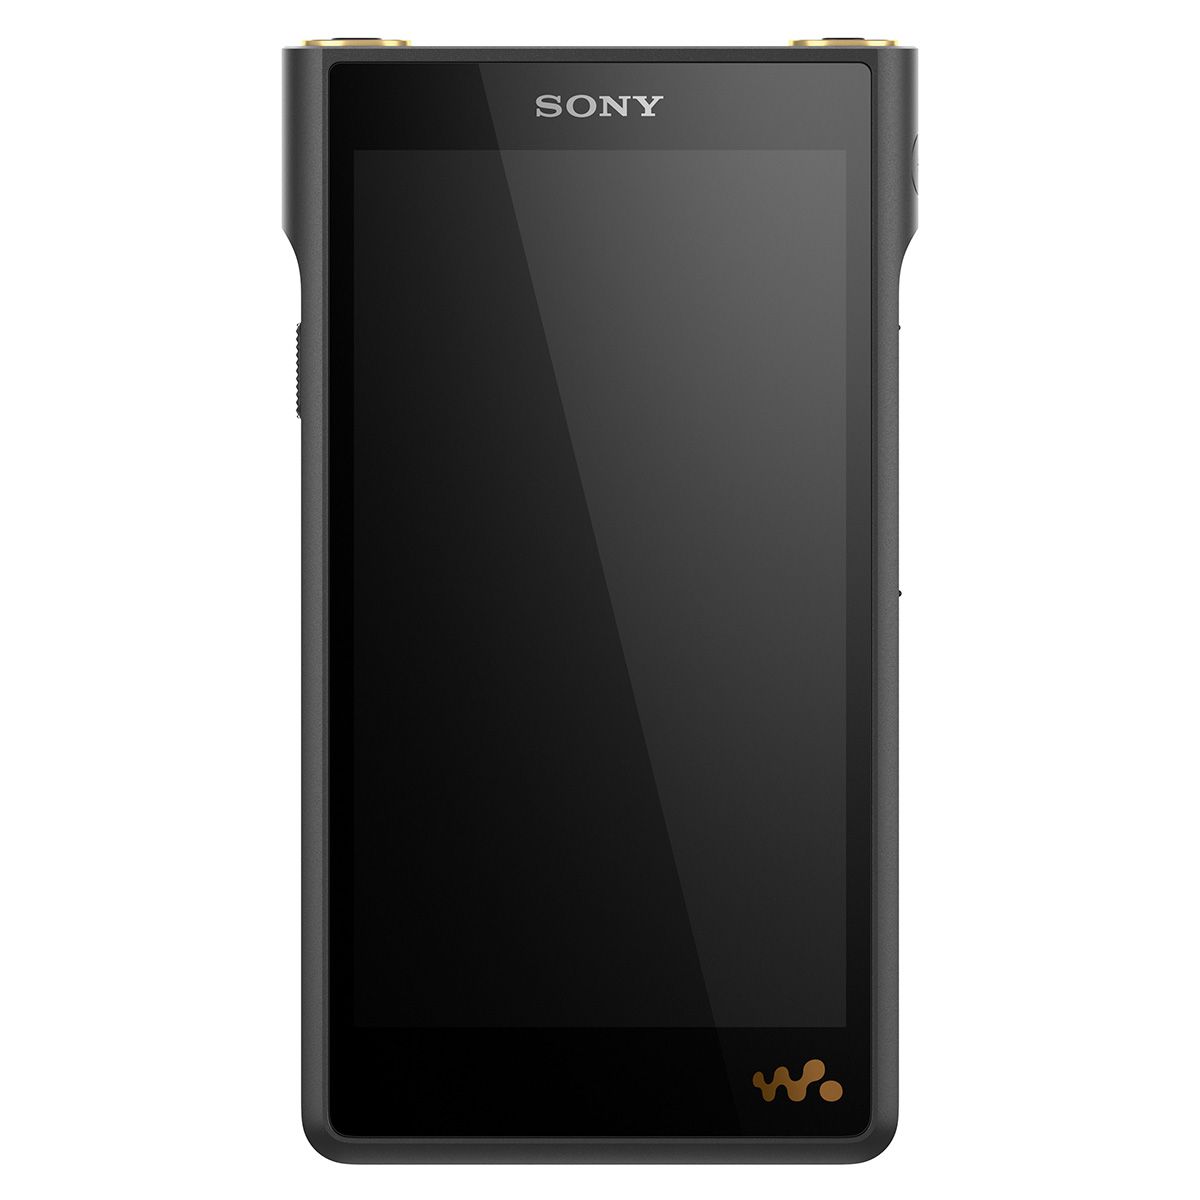 Sony WM1AM2 Walkman Digital Music Player - front view with blank screen